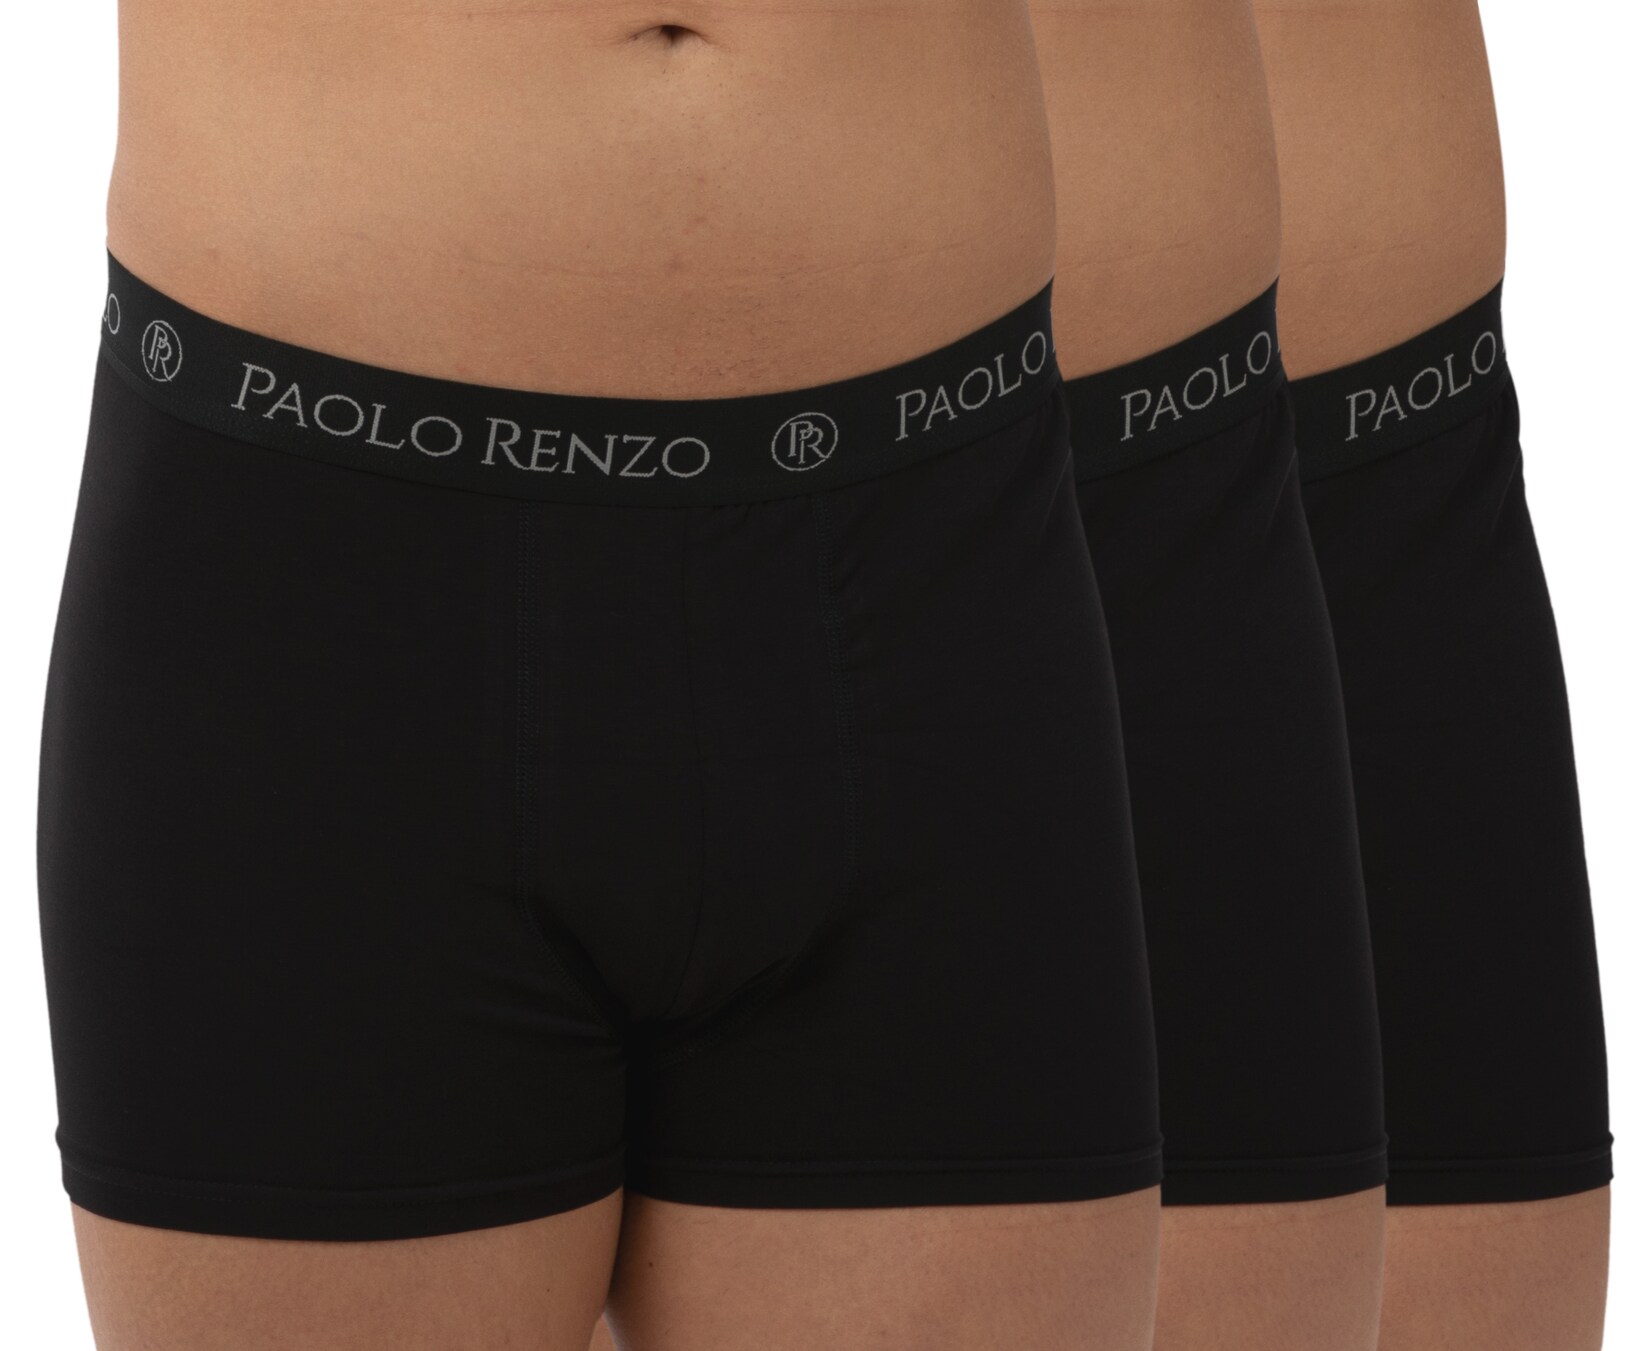 Paolo Renzo® Hipster Boxershorts 6 Stück - Größe XXL - Dunkelgrau